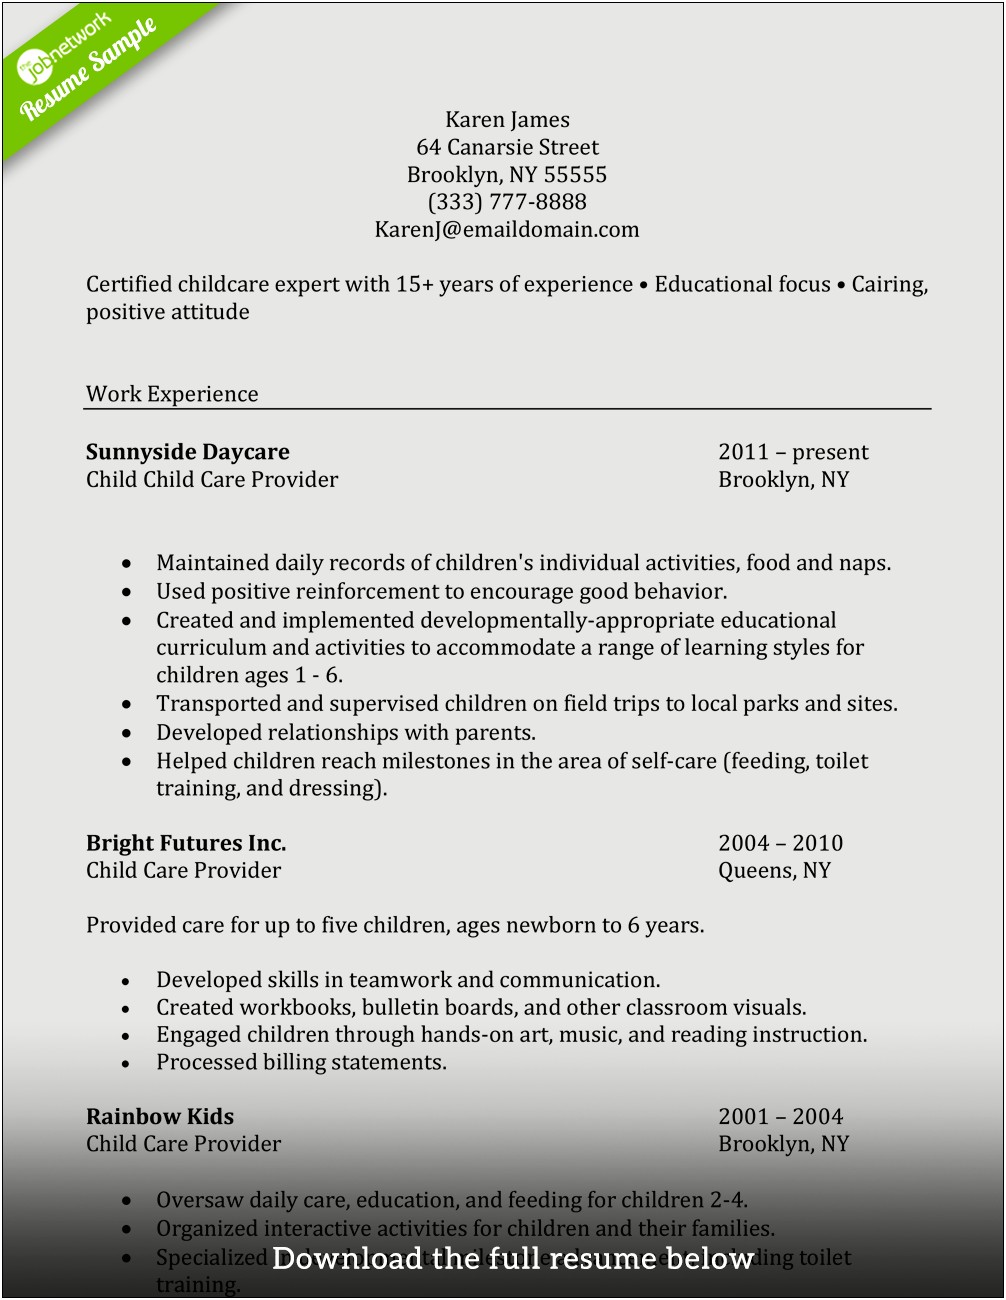 Resume Skills For Child Care Provider